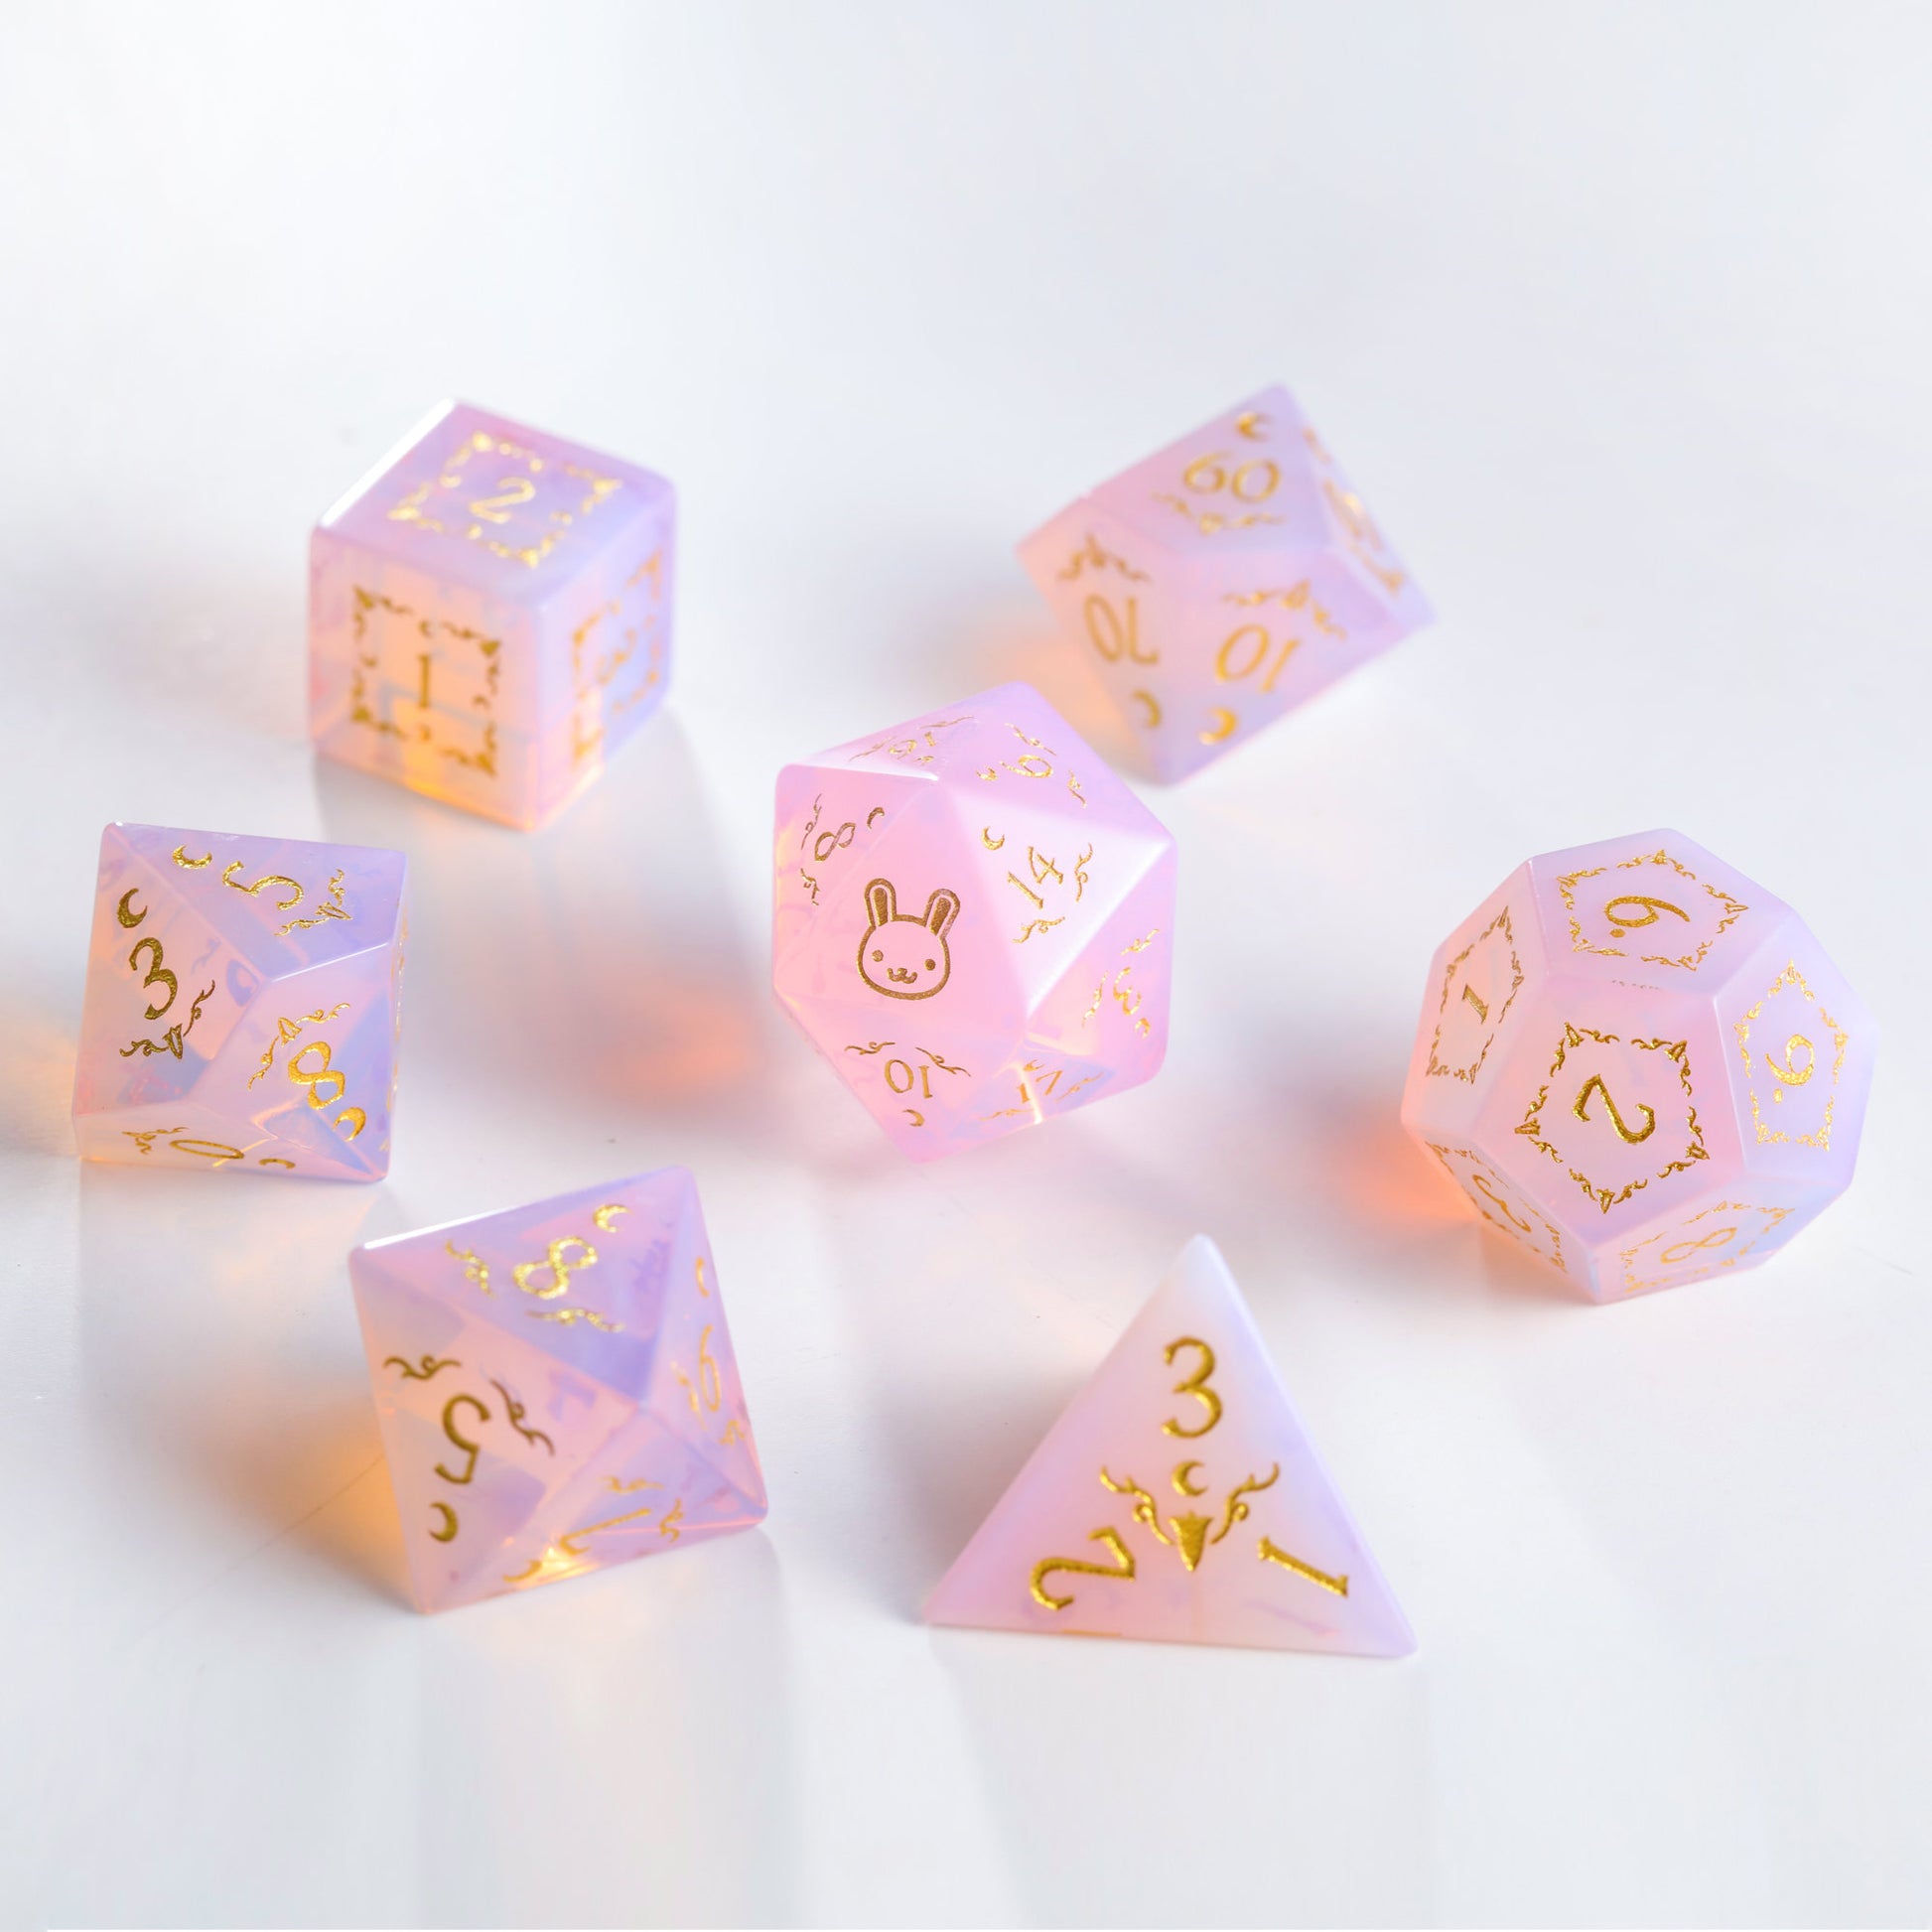 Pink Opalite Gemstone Bunny F*ck DnD D&D Dice Set - CrystalMaggie